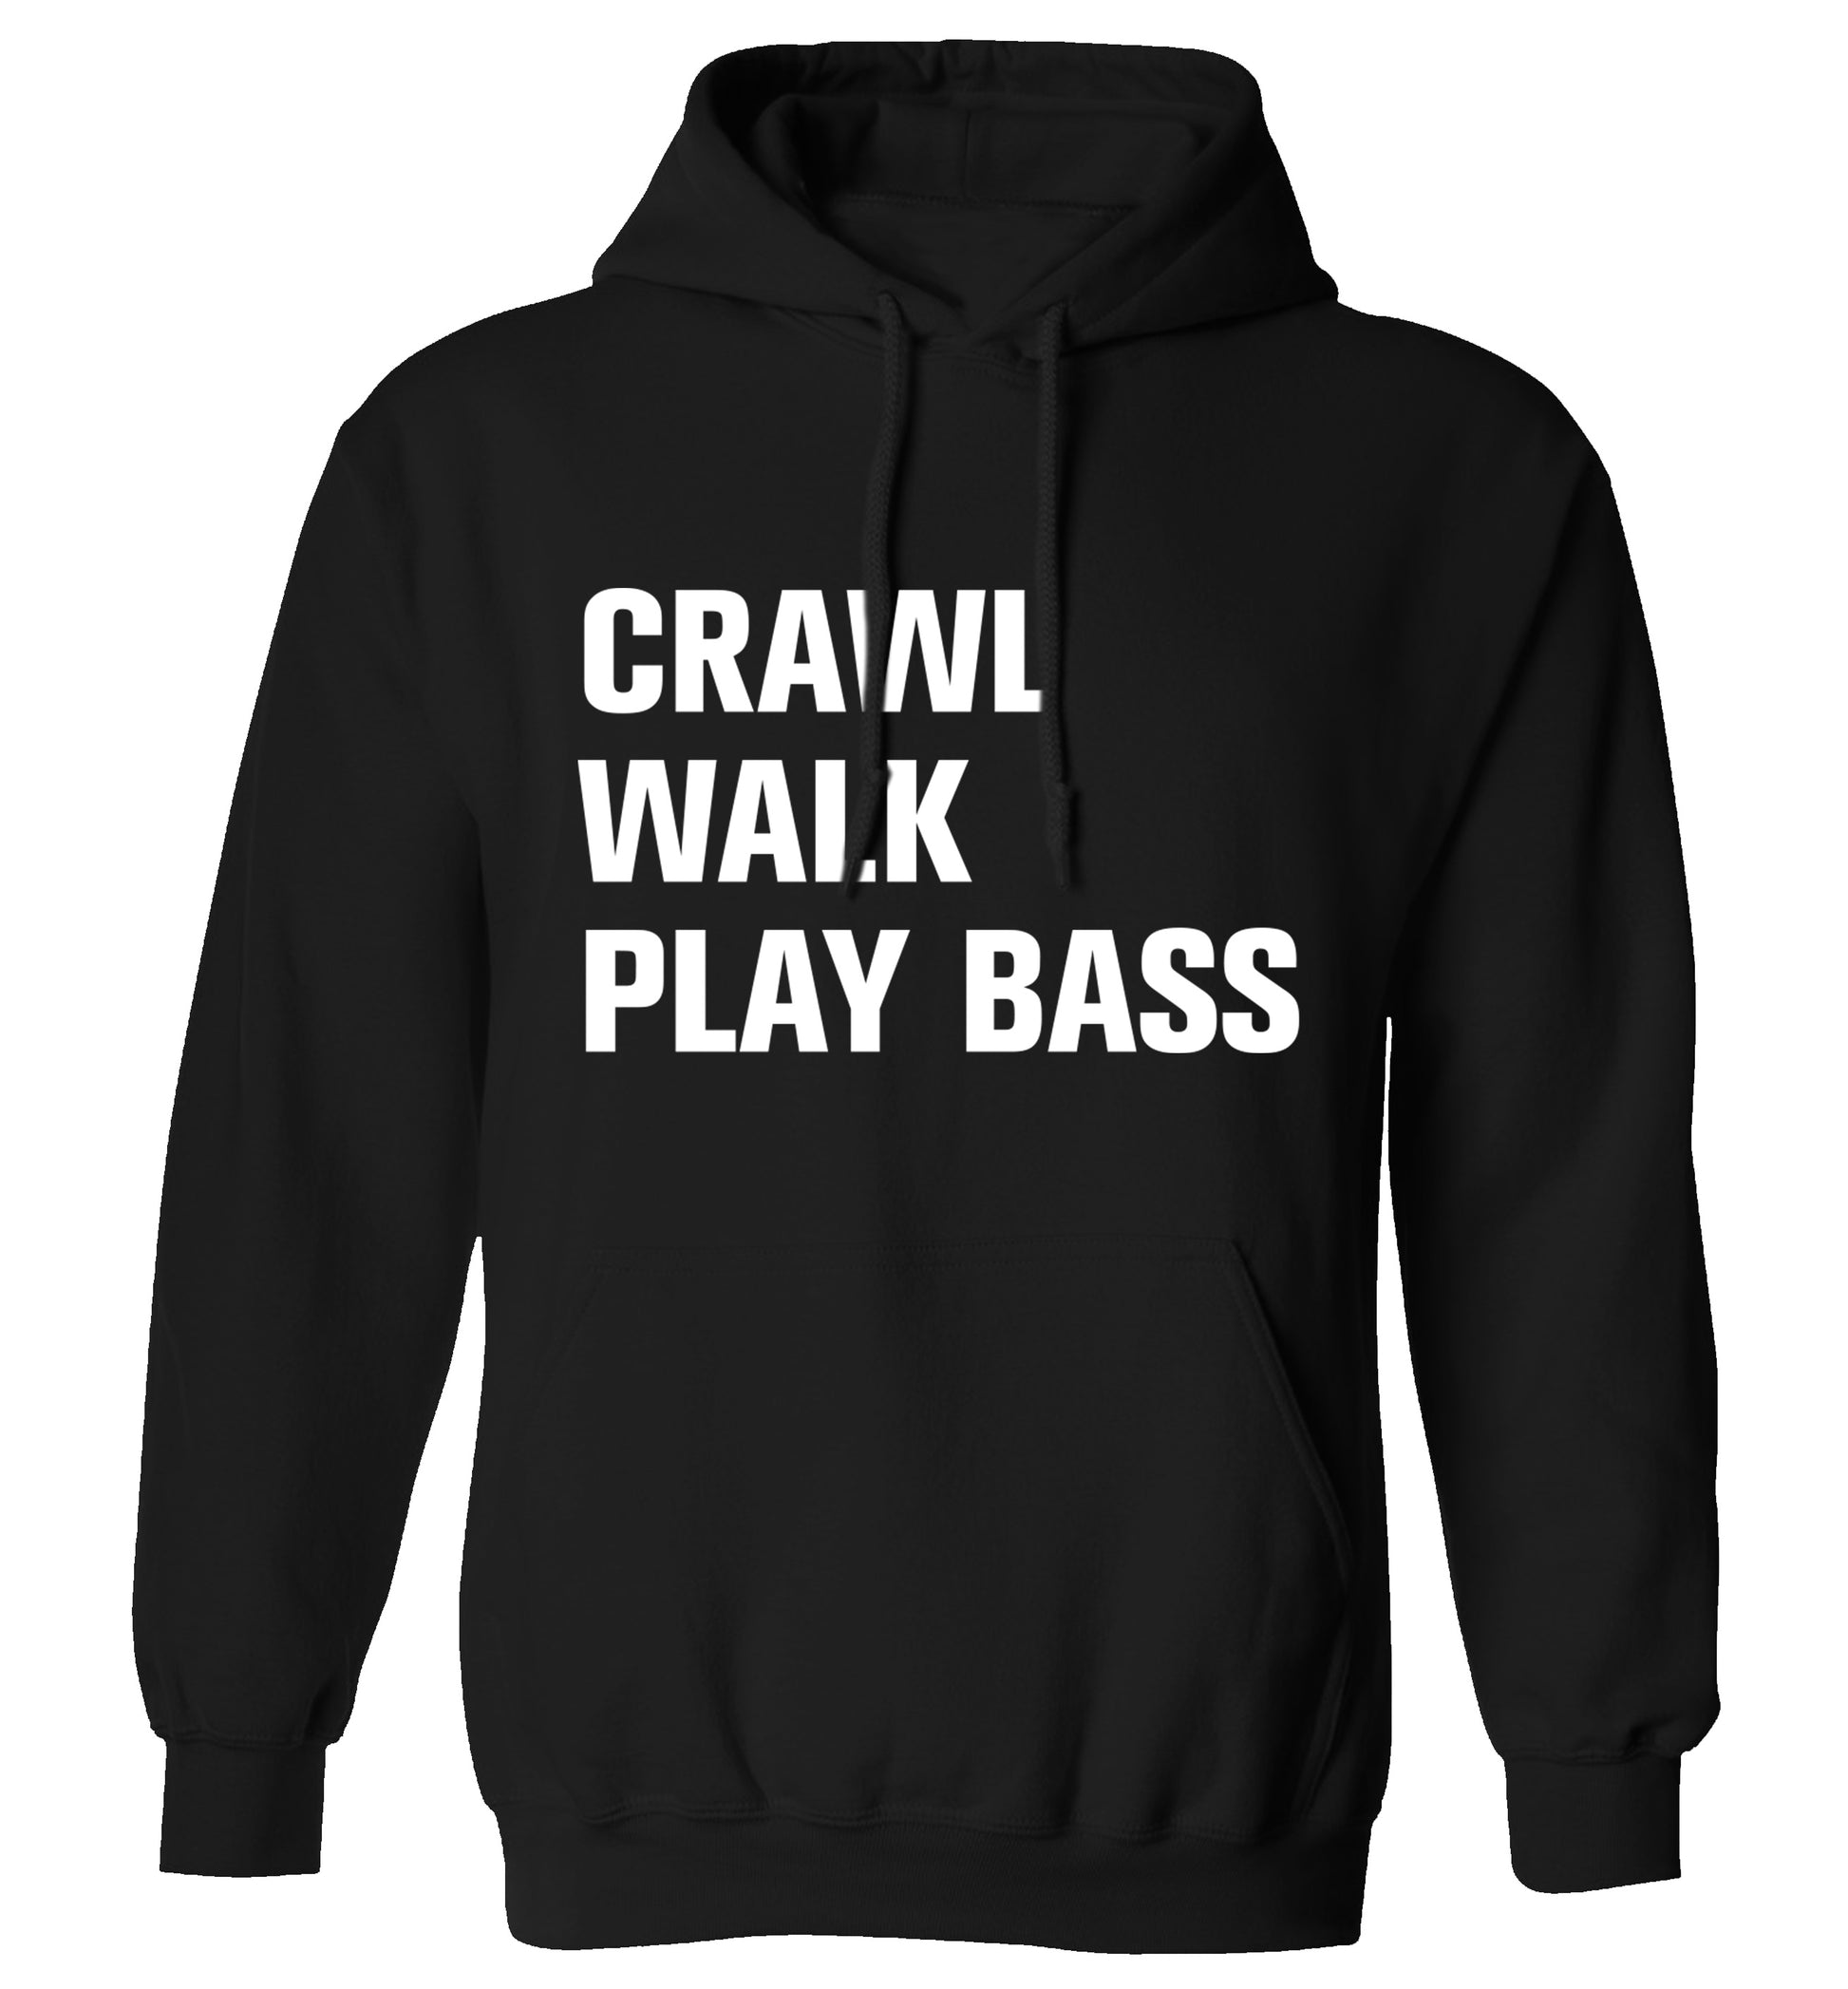 Crawl Walk Play Bass adults unisex black hoodie 2XL